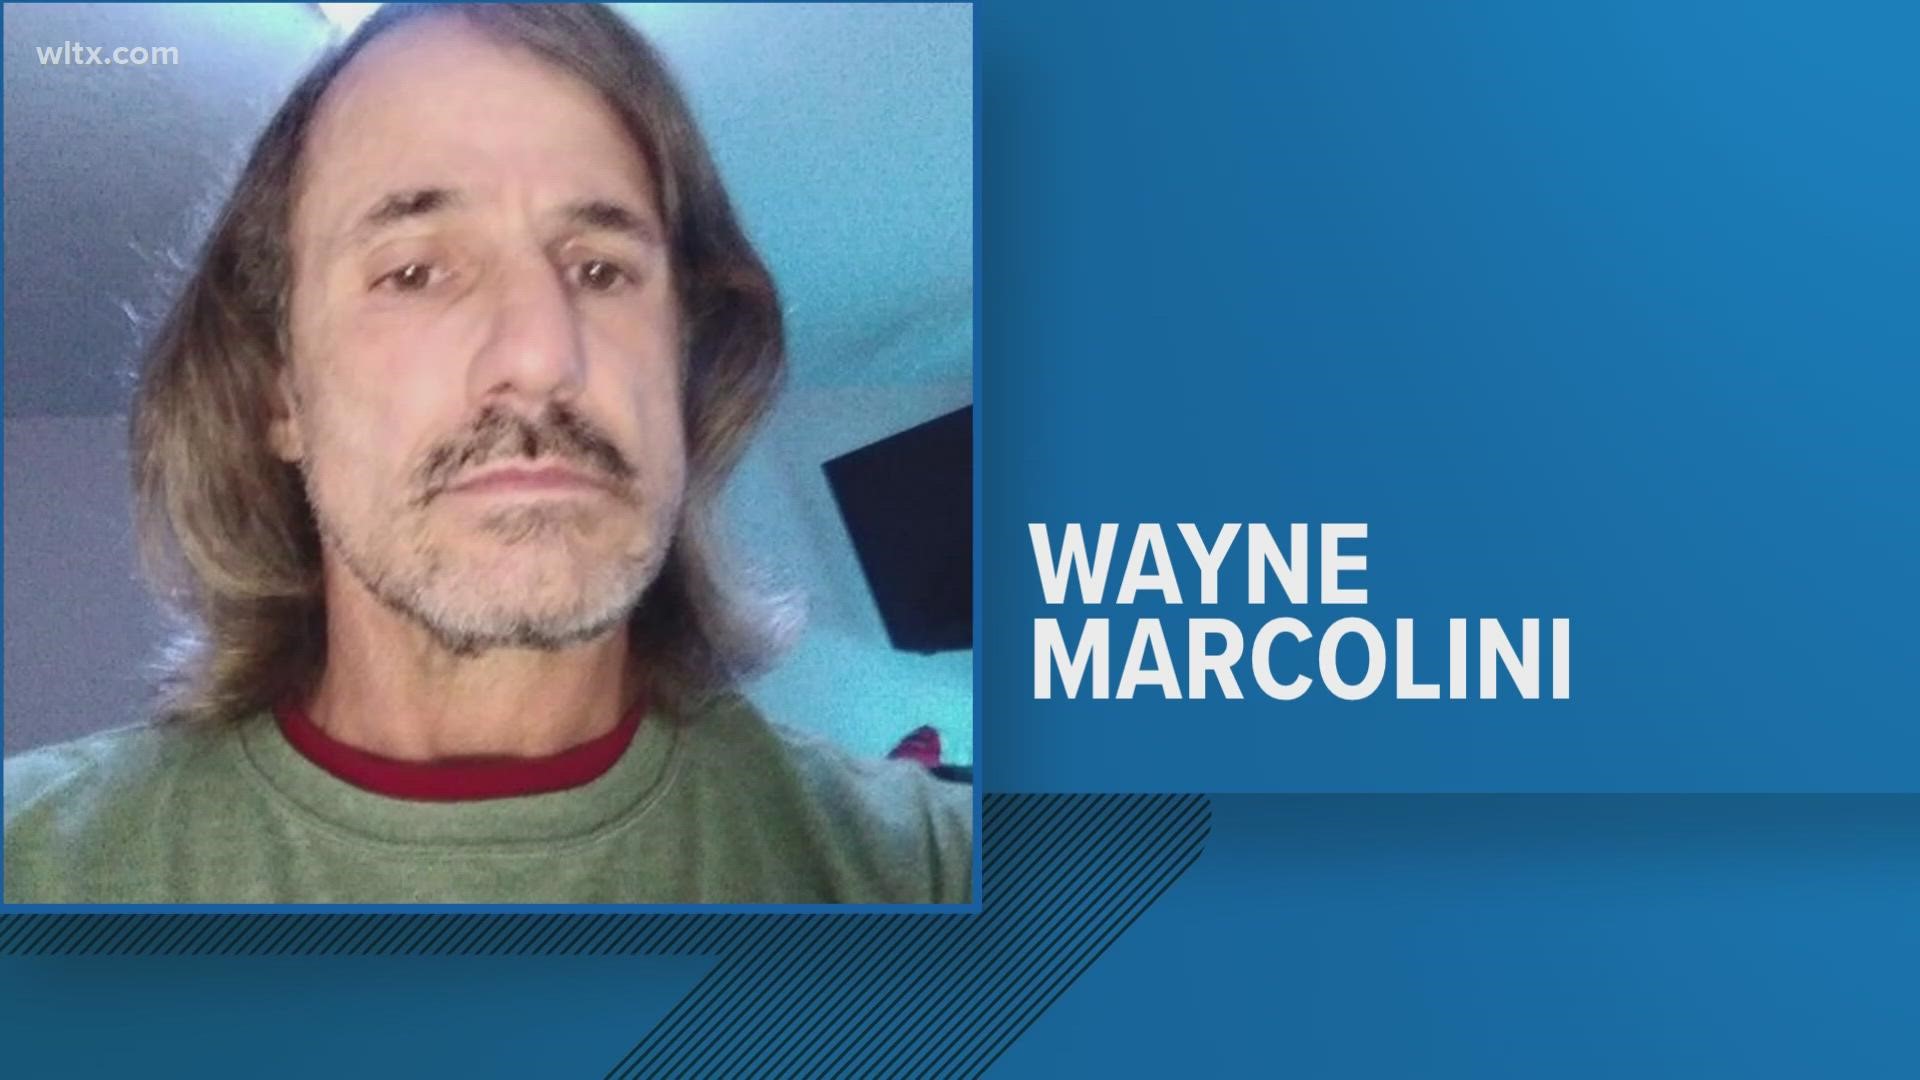 Wayne Marcolini, 62 was last seen by a friend on November 25, 2022.